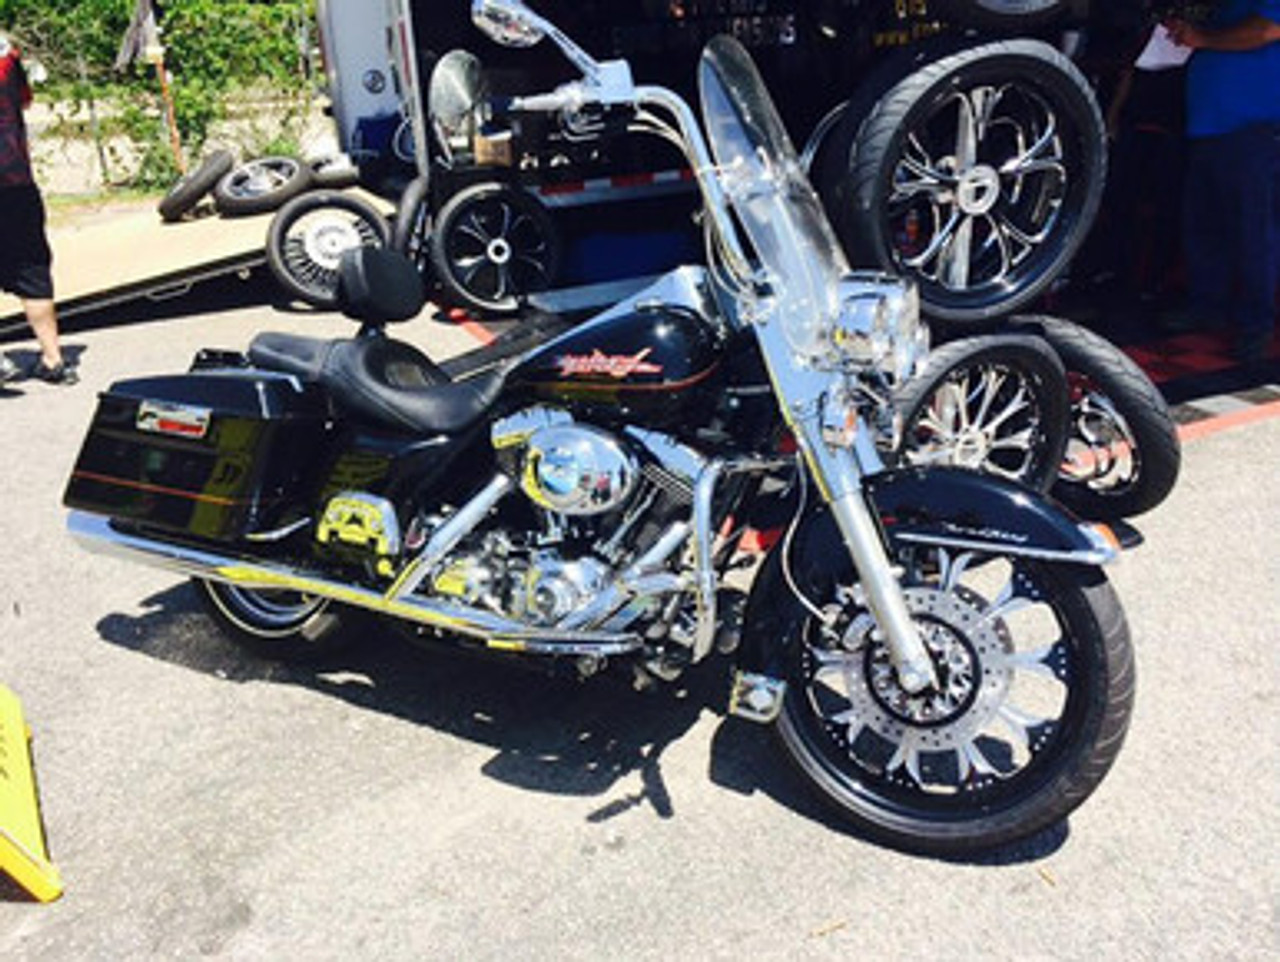 FTD Customs Harley Davidson 23 inch Fat Front Wheel Wizard